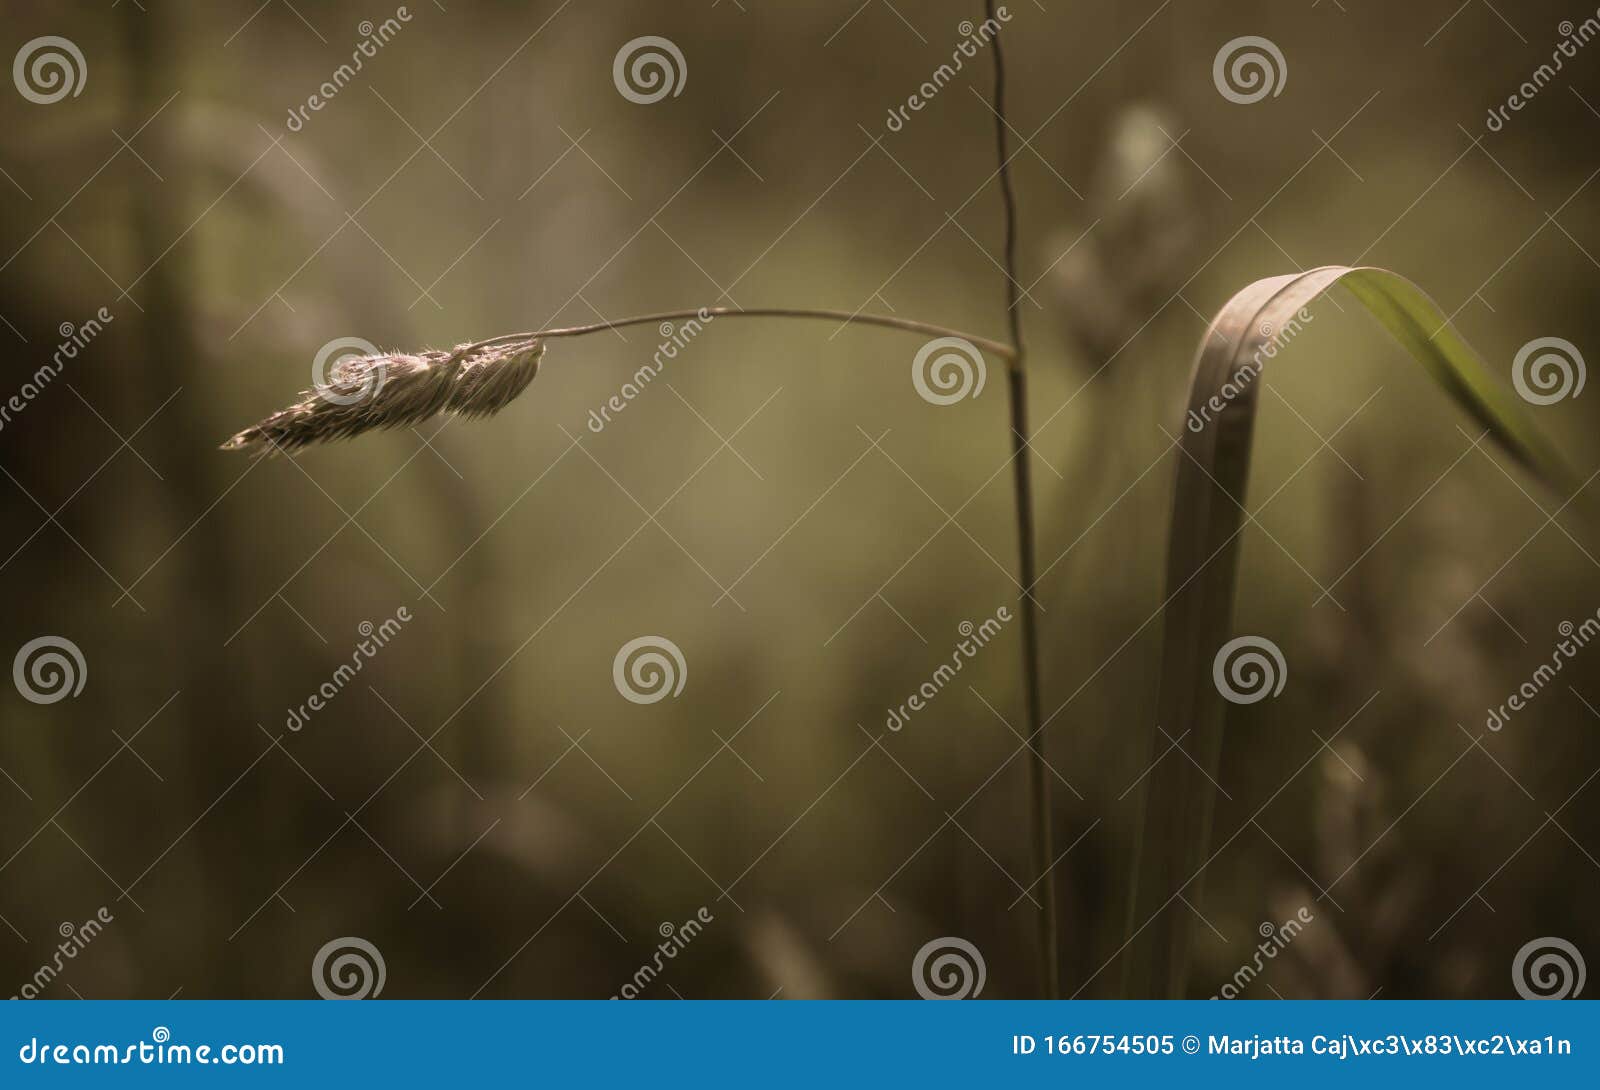 Serene Nature Grass Desktop Wallpaper Stock Image - Image of spring